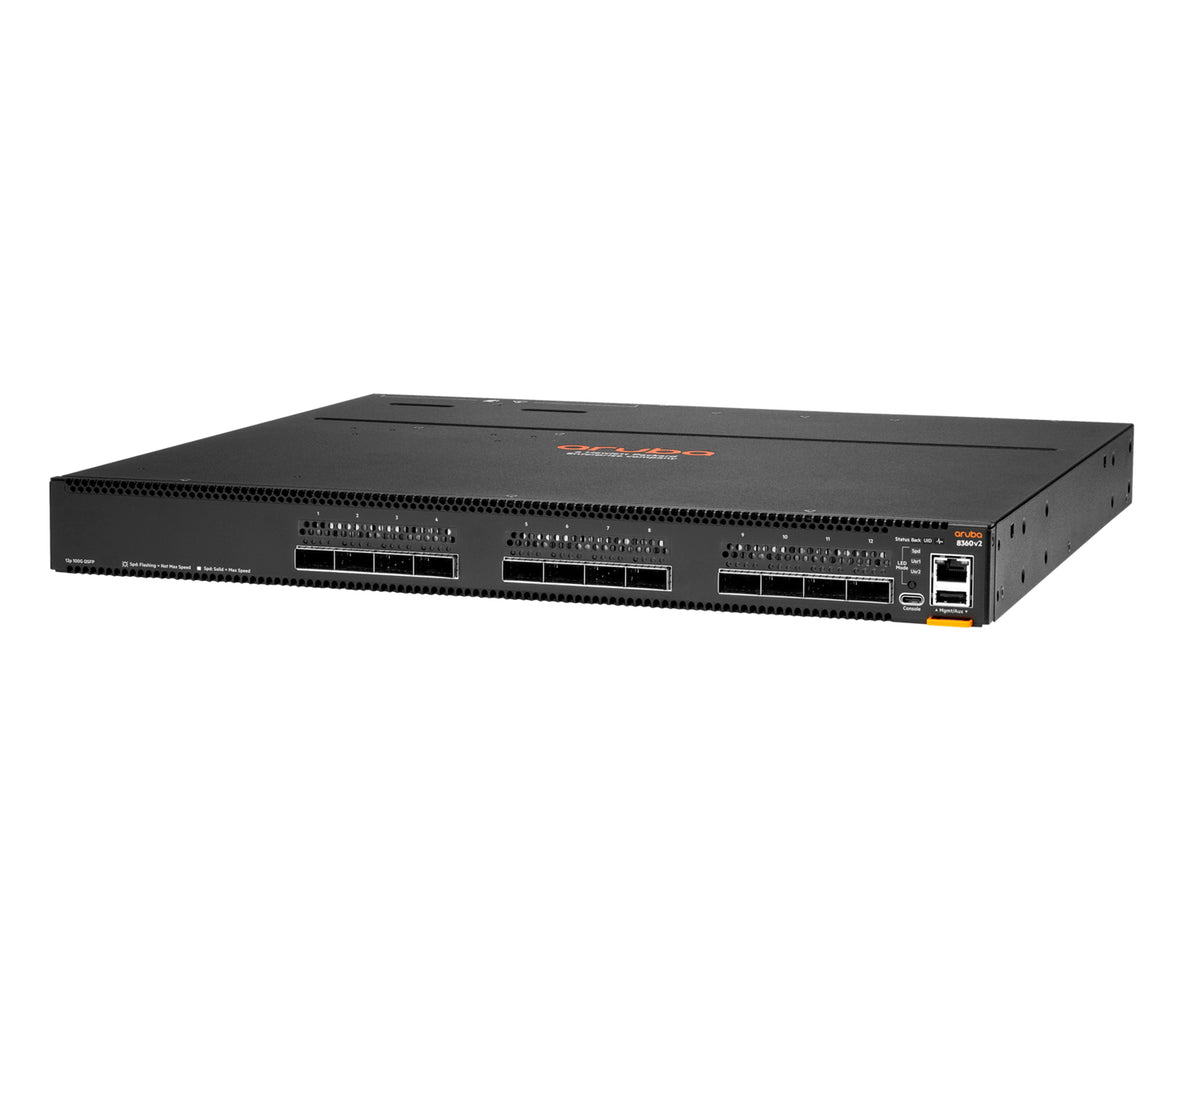 JL709C - Hewlett Packard Enterprise - Aruba 8360-12C v2 Managed L3 1U